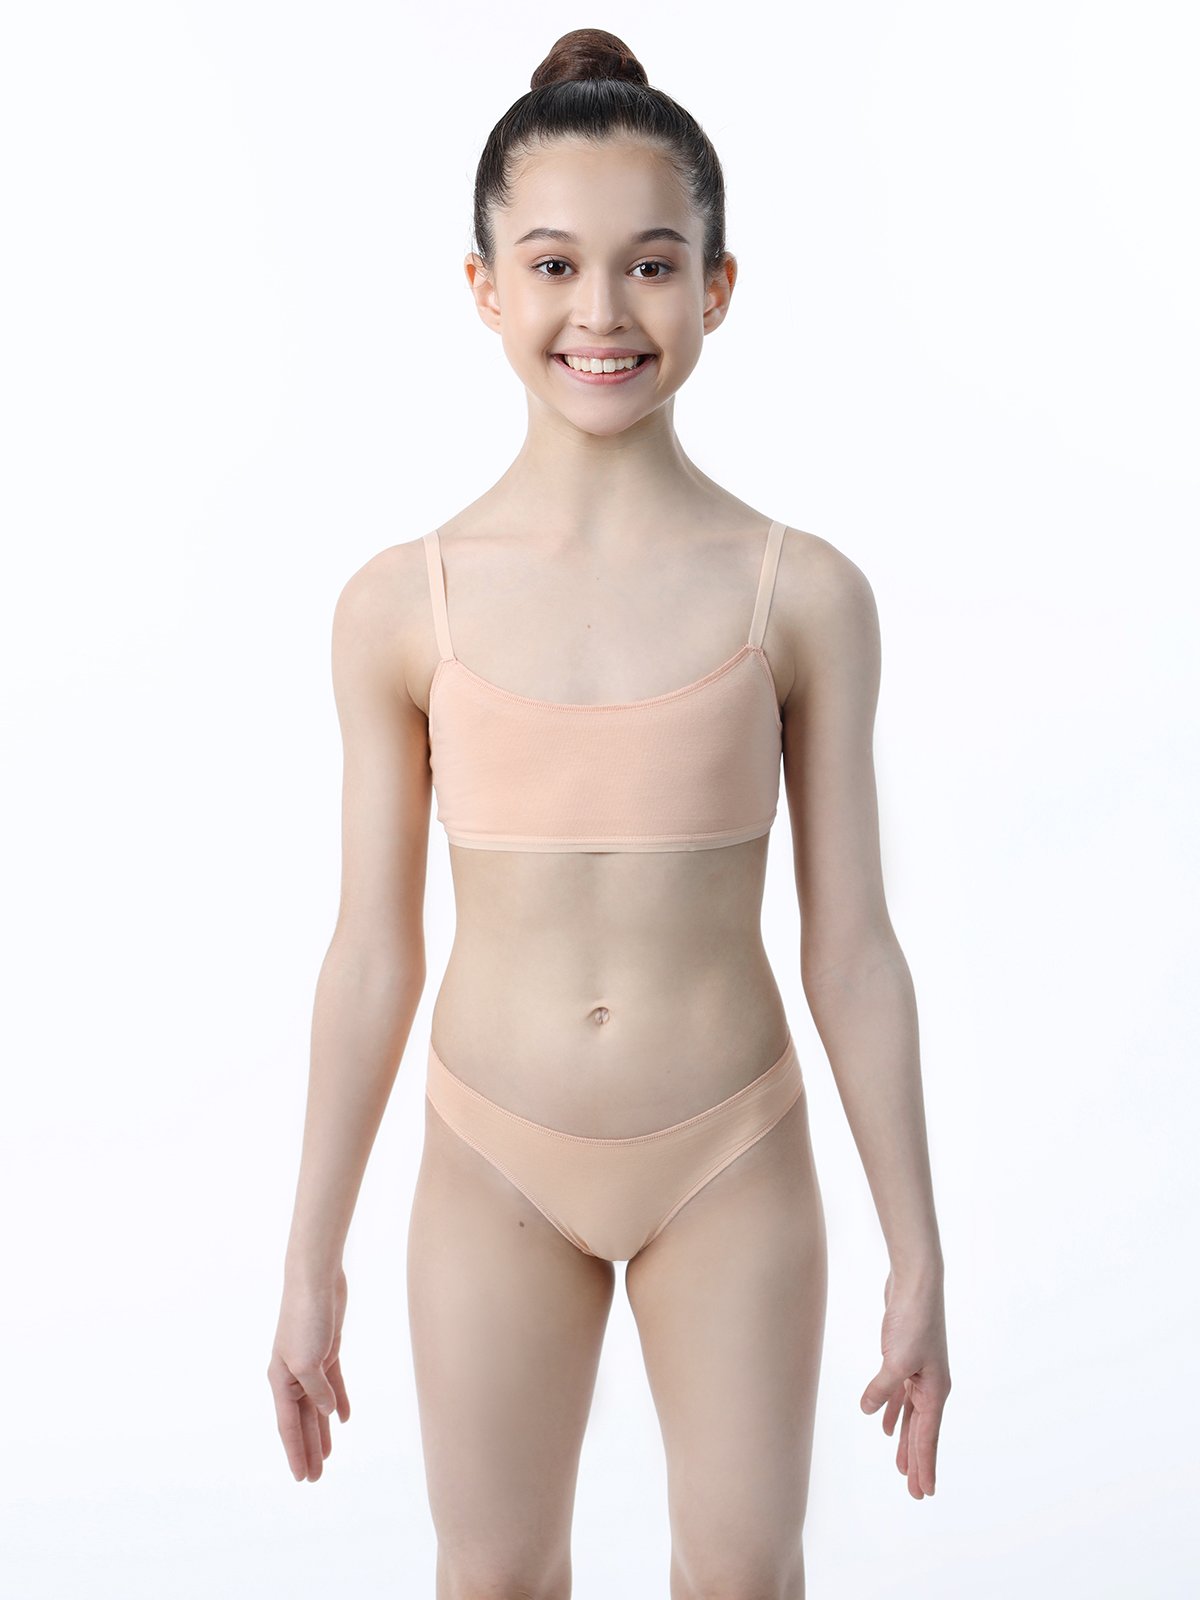 SASAKI Gymnastics / Rhythmic Gymnastics Women's Underwear Proskin  Foundation F-257 Beige (BE) L